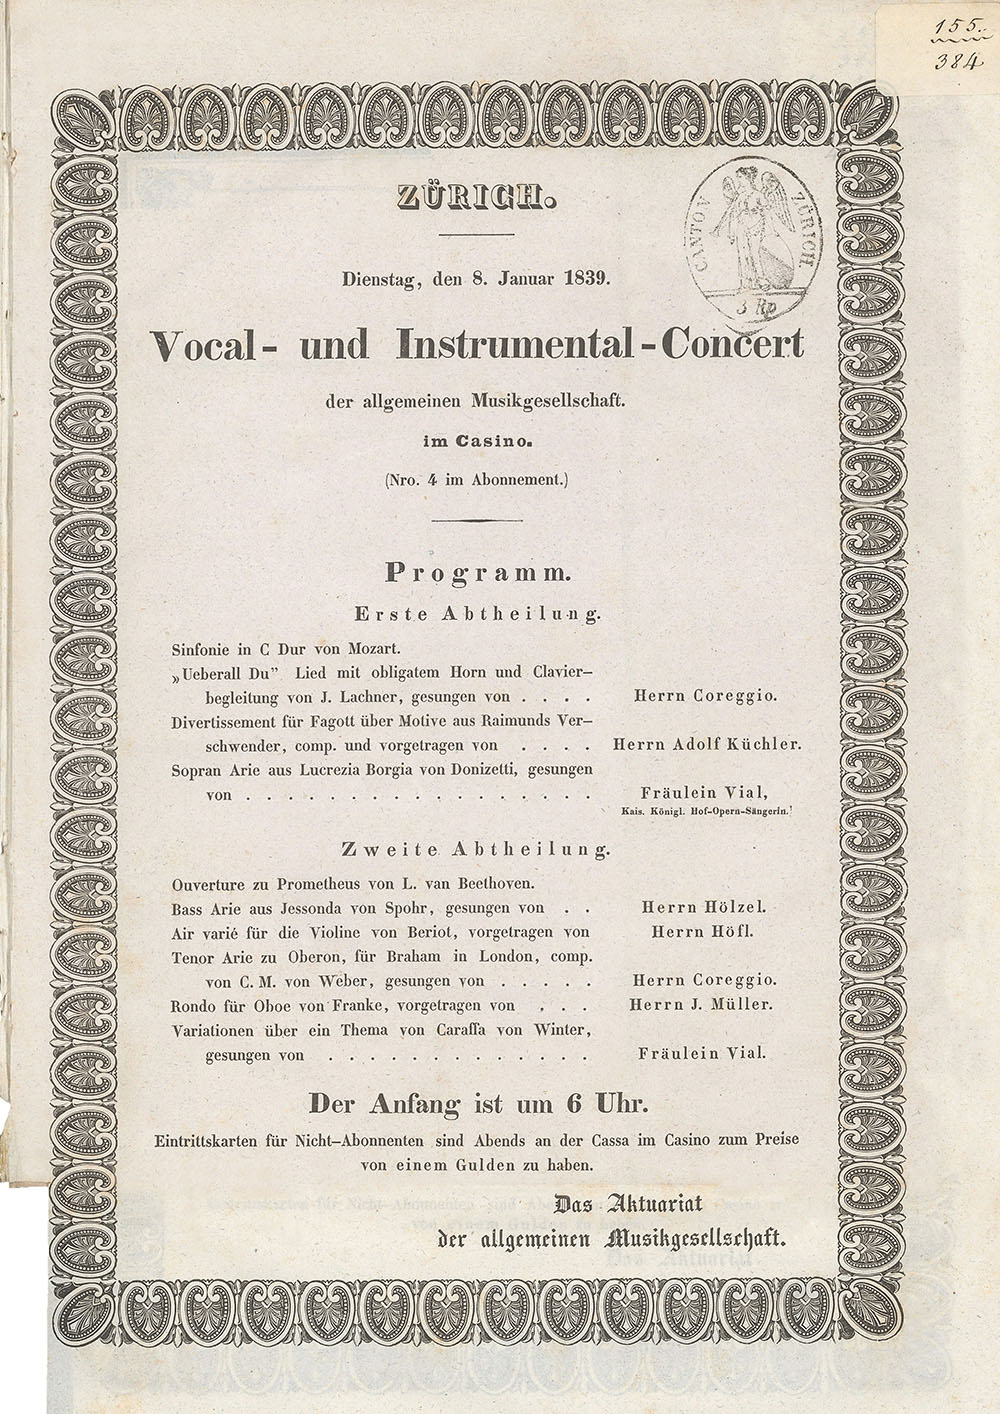 A concert programme for the Allgemeine Musikgesellschaft Zürich [Zurich General Music Society] dated 1839, displaying different styles, instruments and genres. (Image: ZB Zürich)